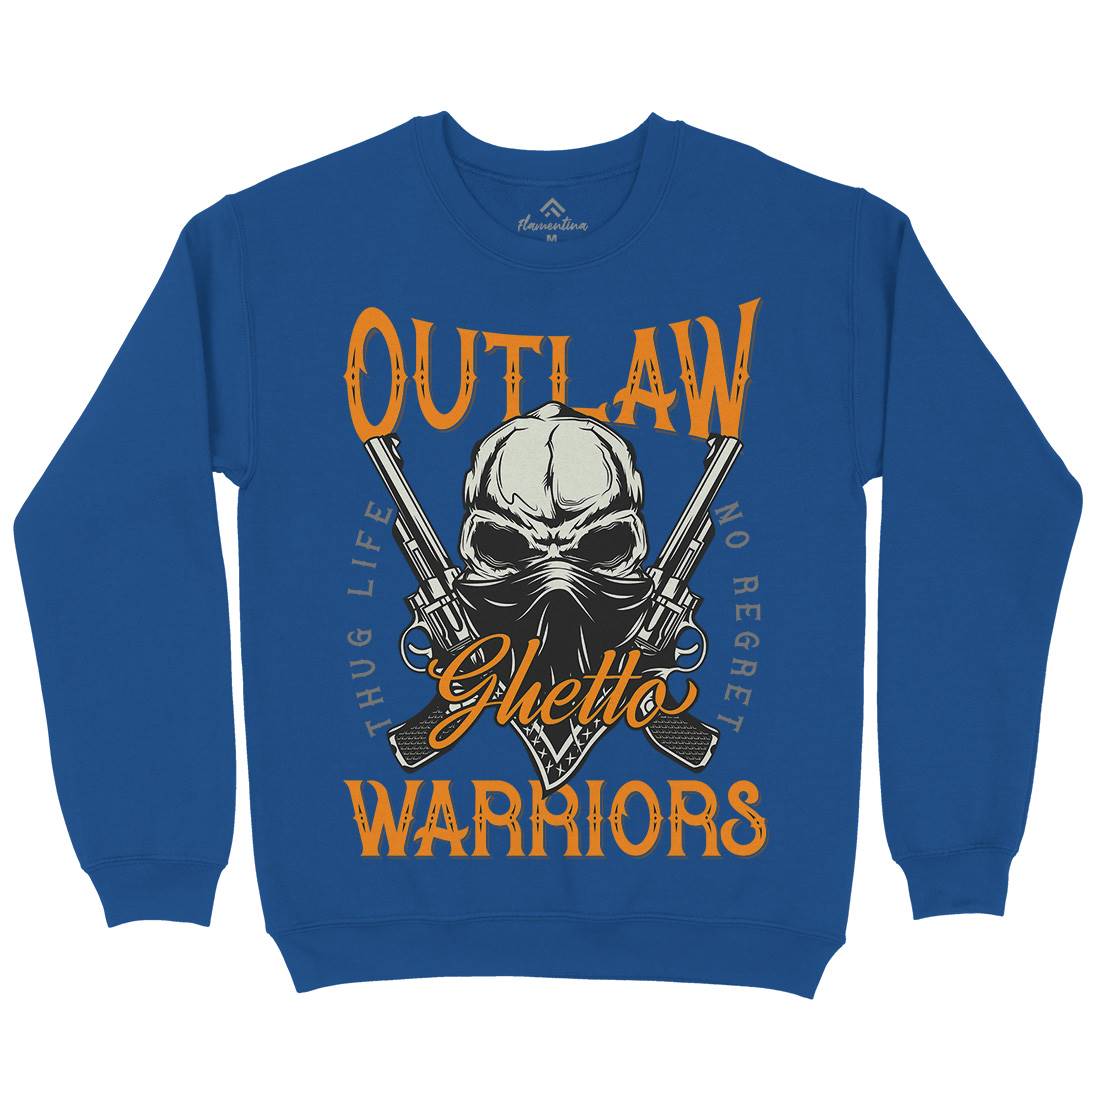 Outlaw Warriors Mens Crew Neck Sweatshirt Retro D959